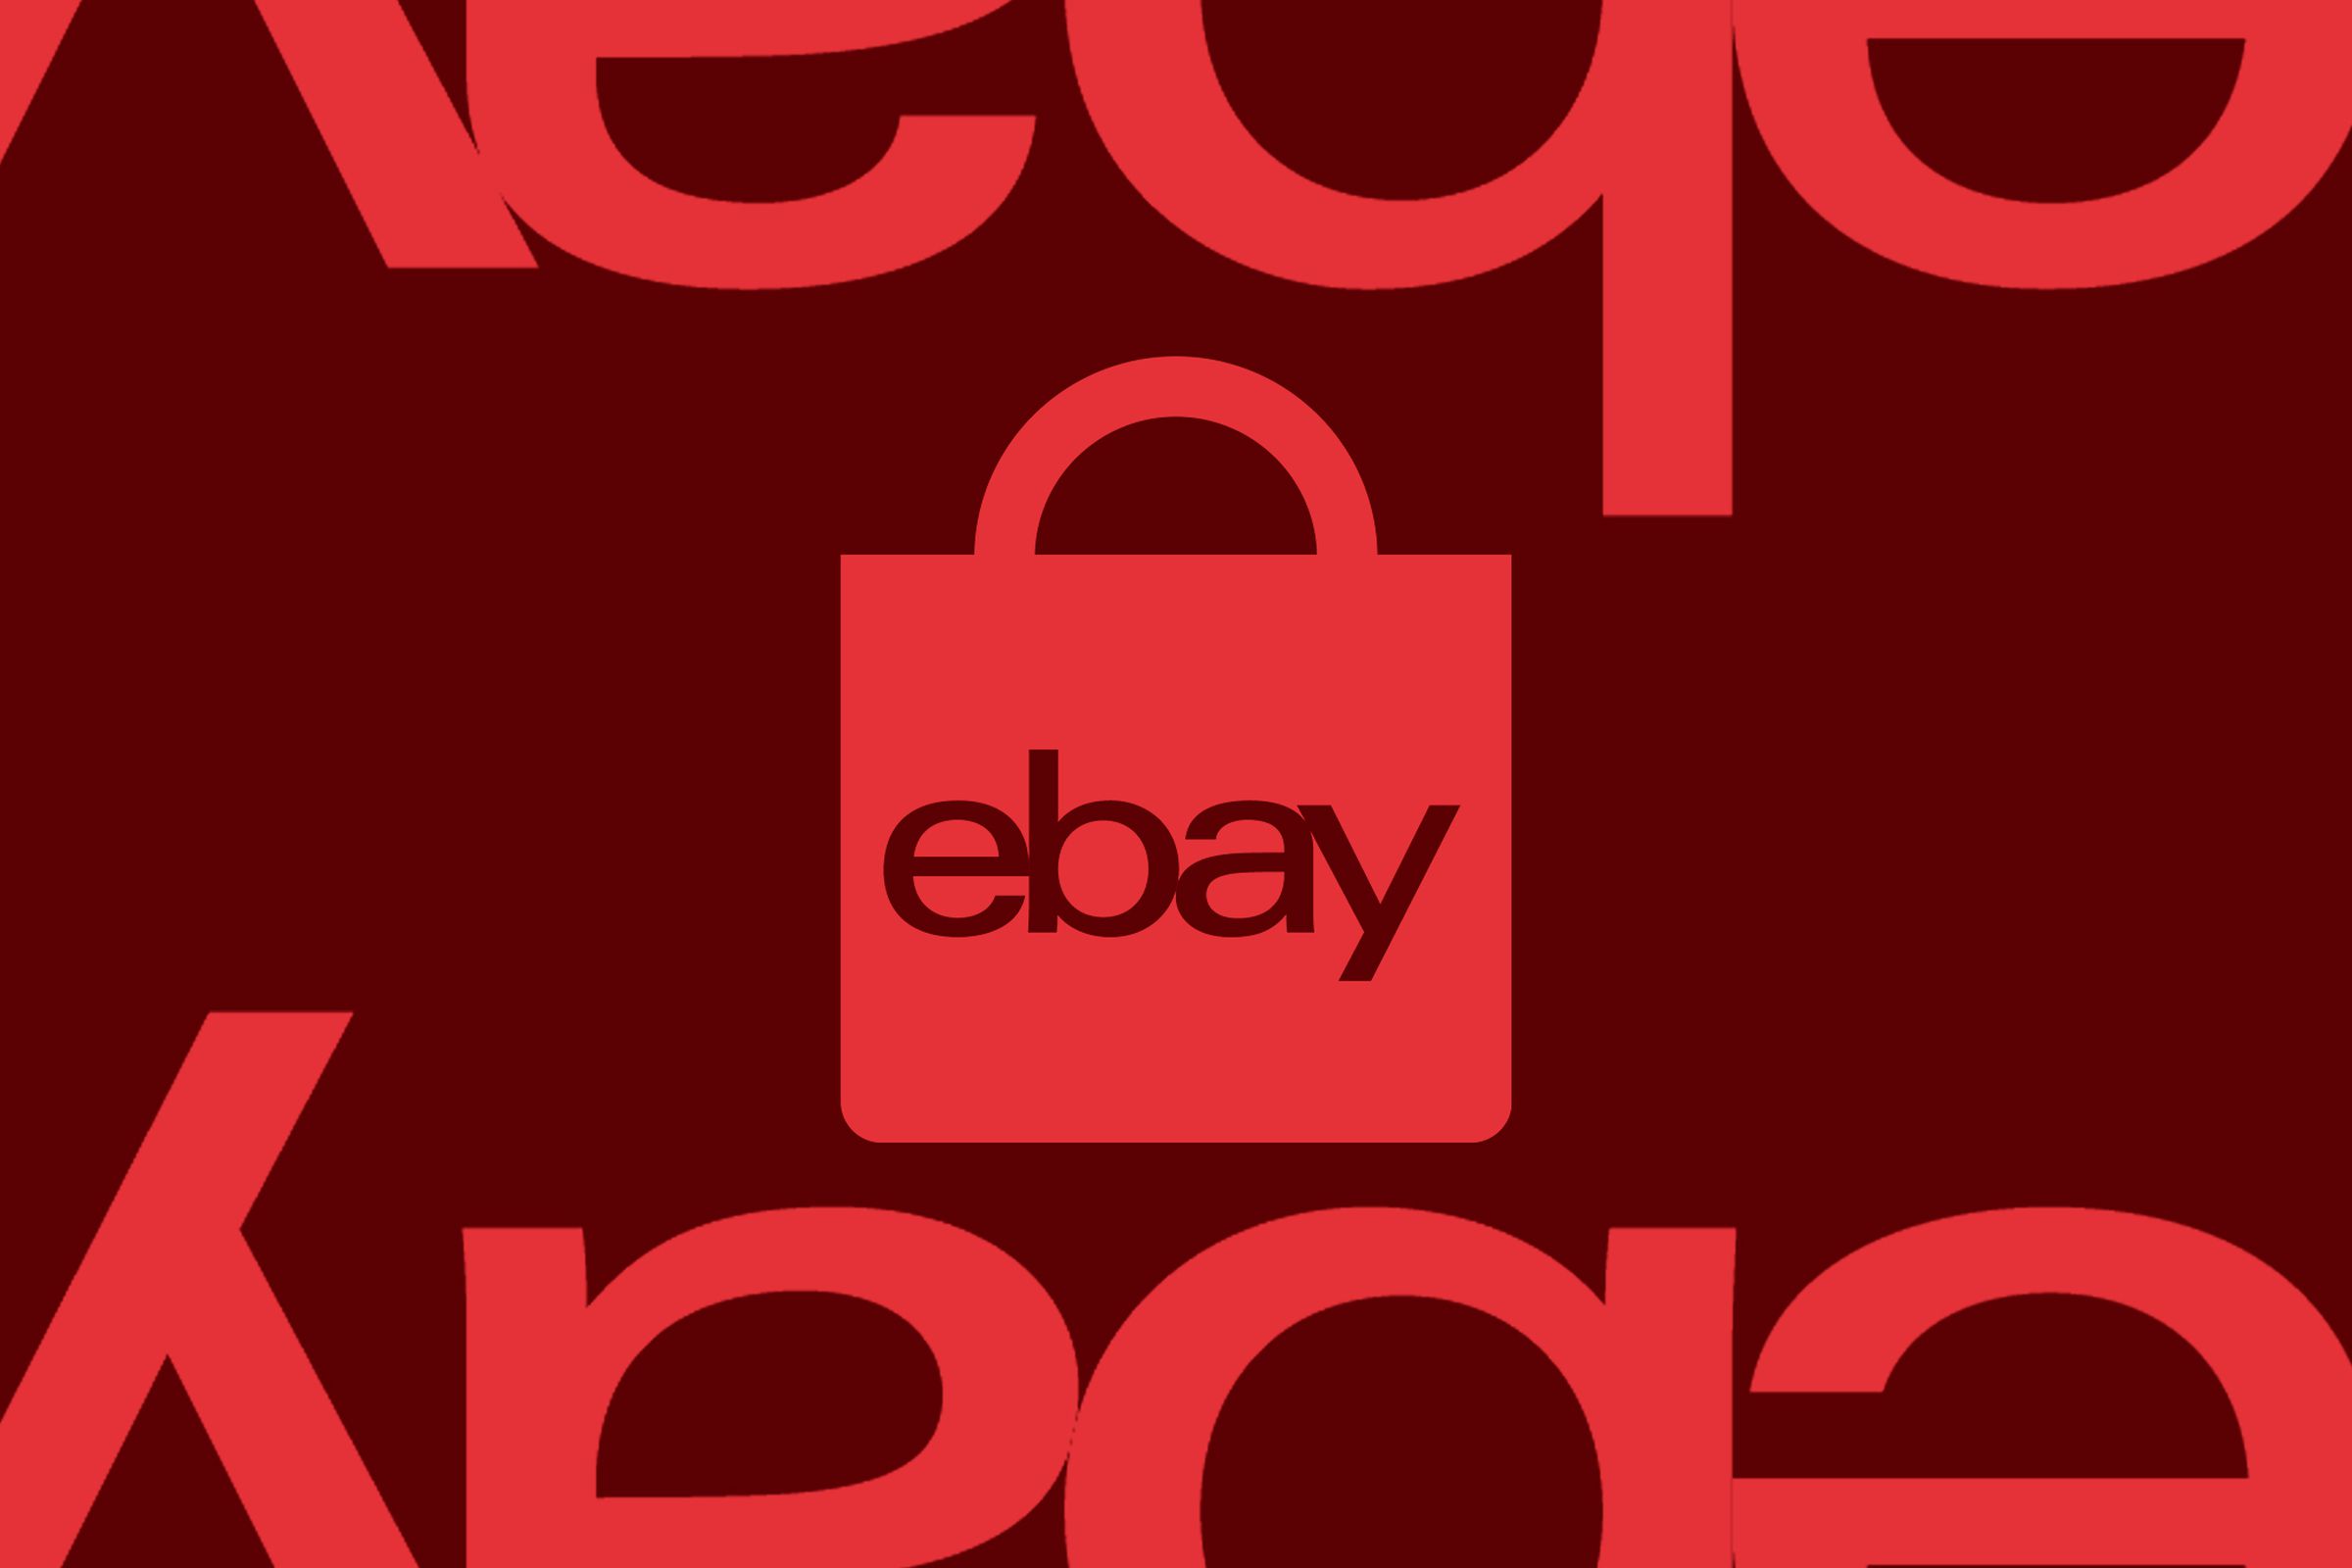 Illustration showing the Ebay logo.